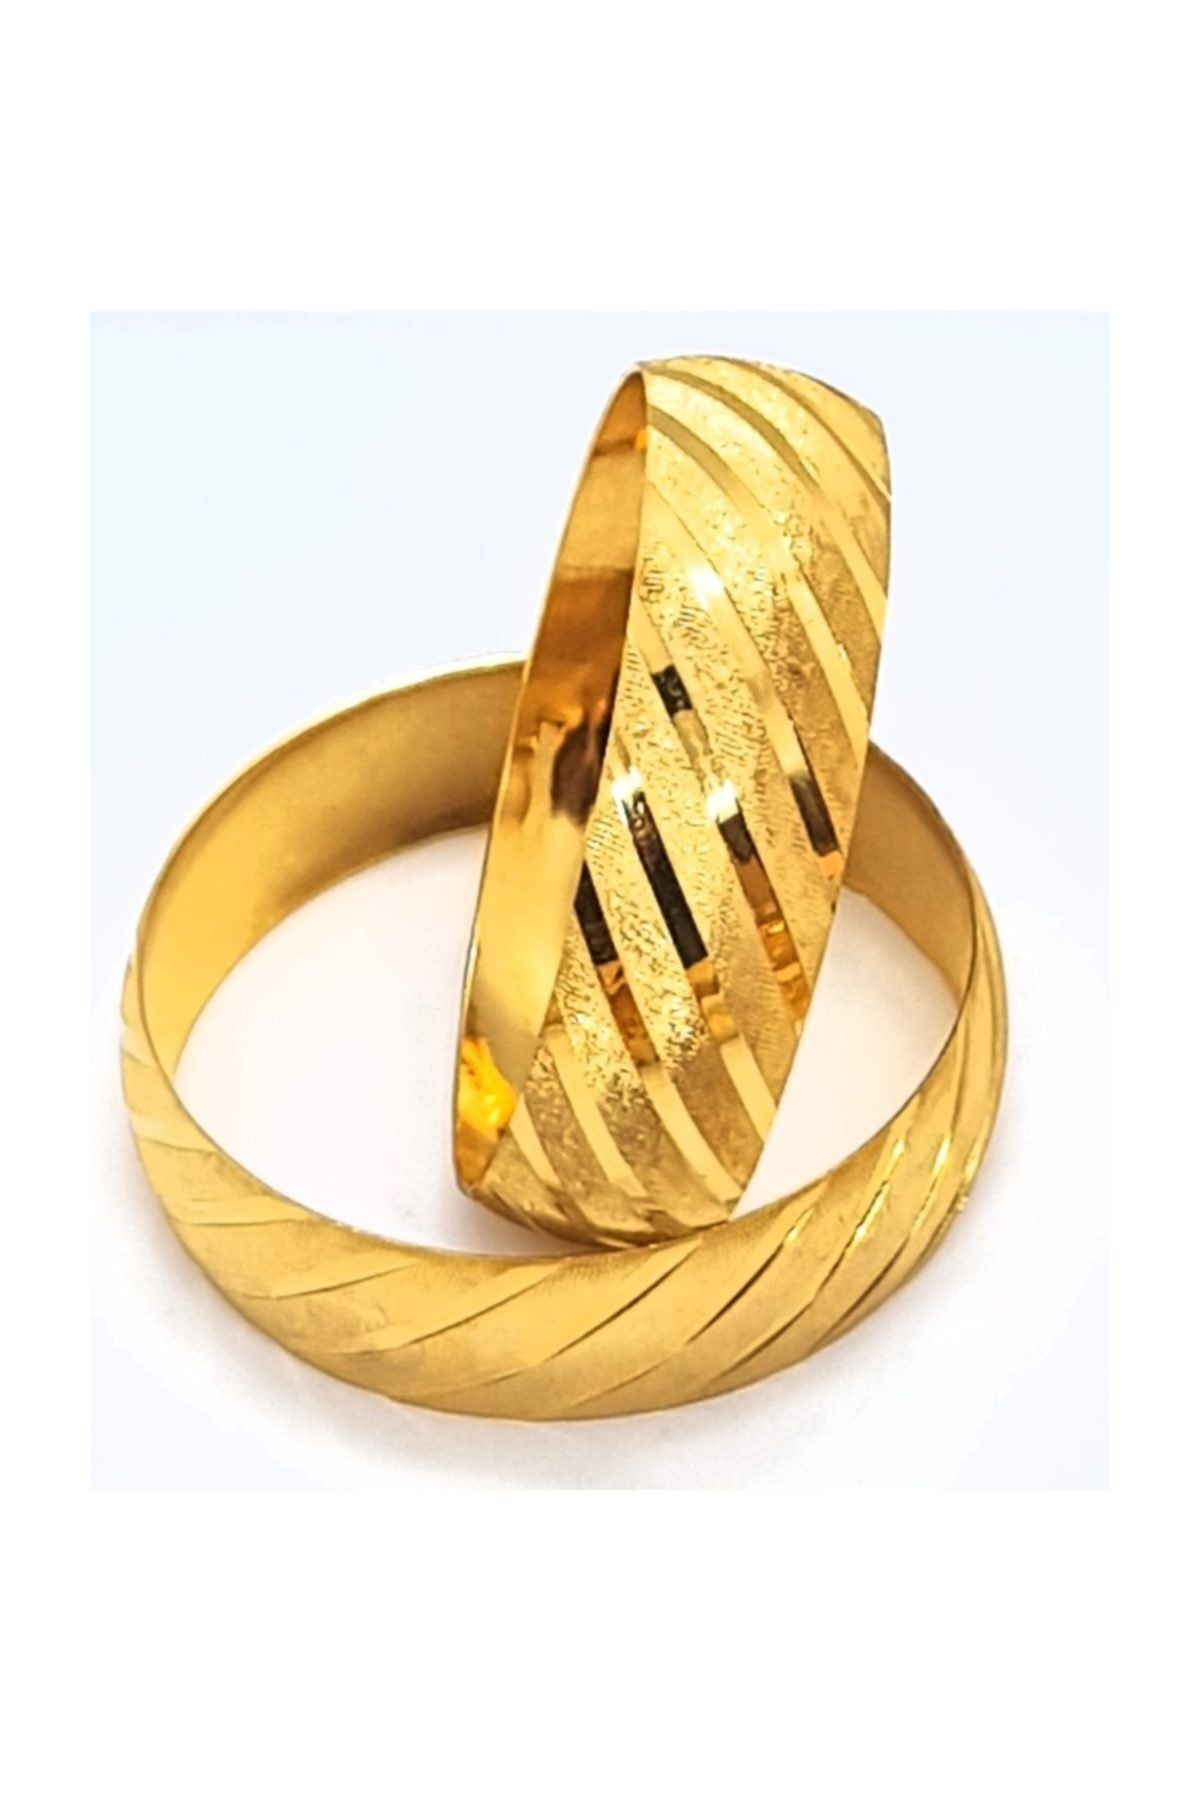 EuroGold Euro Gold Altın Kaplama Bilezik(20 Mmx6.5 Cm)